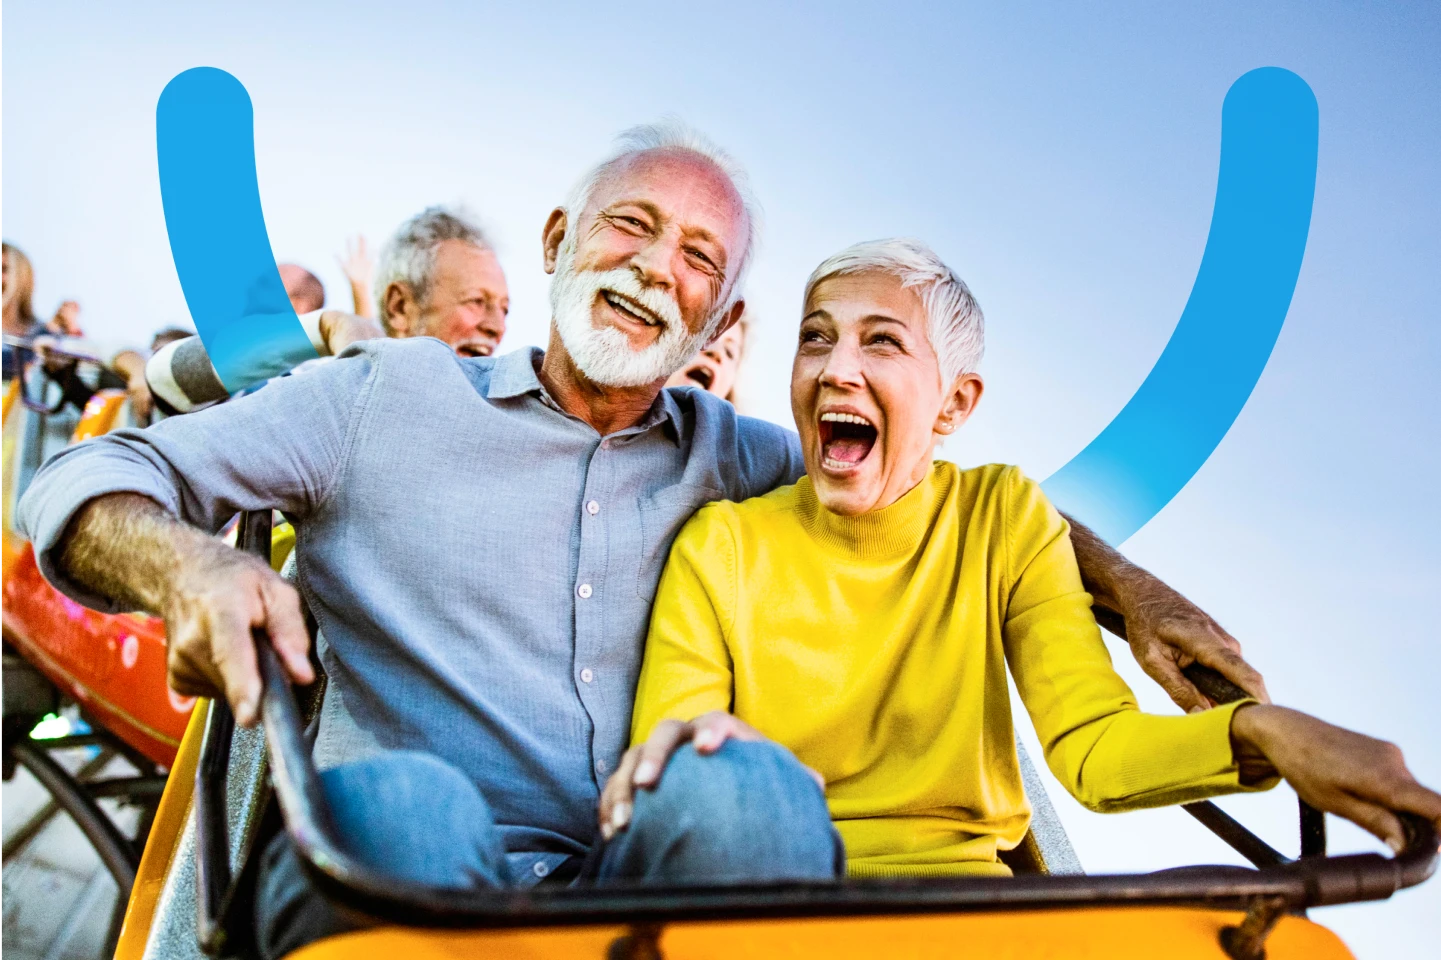 Aspen Dental dentures patients ride a roller coaster. 